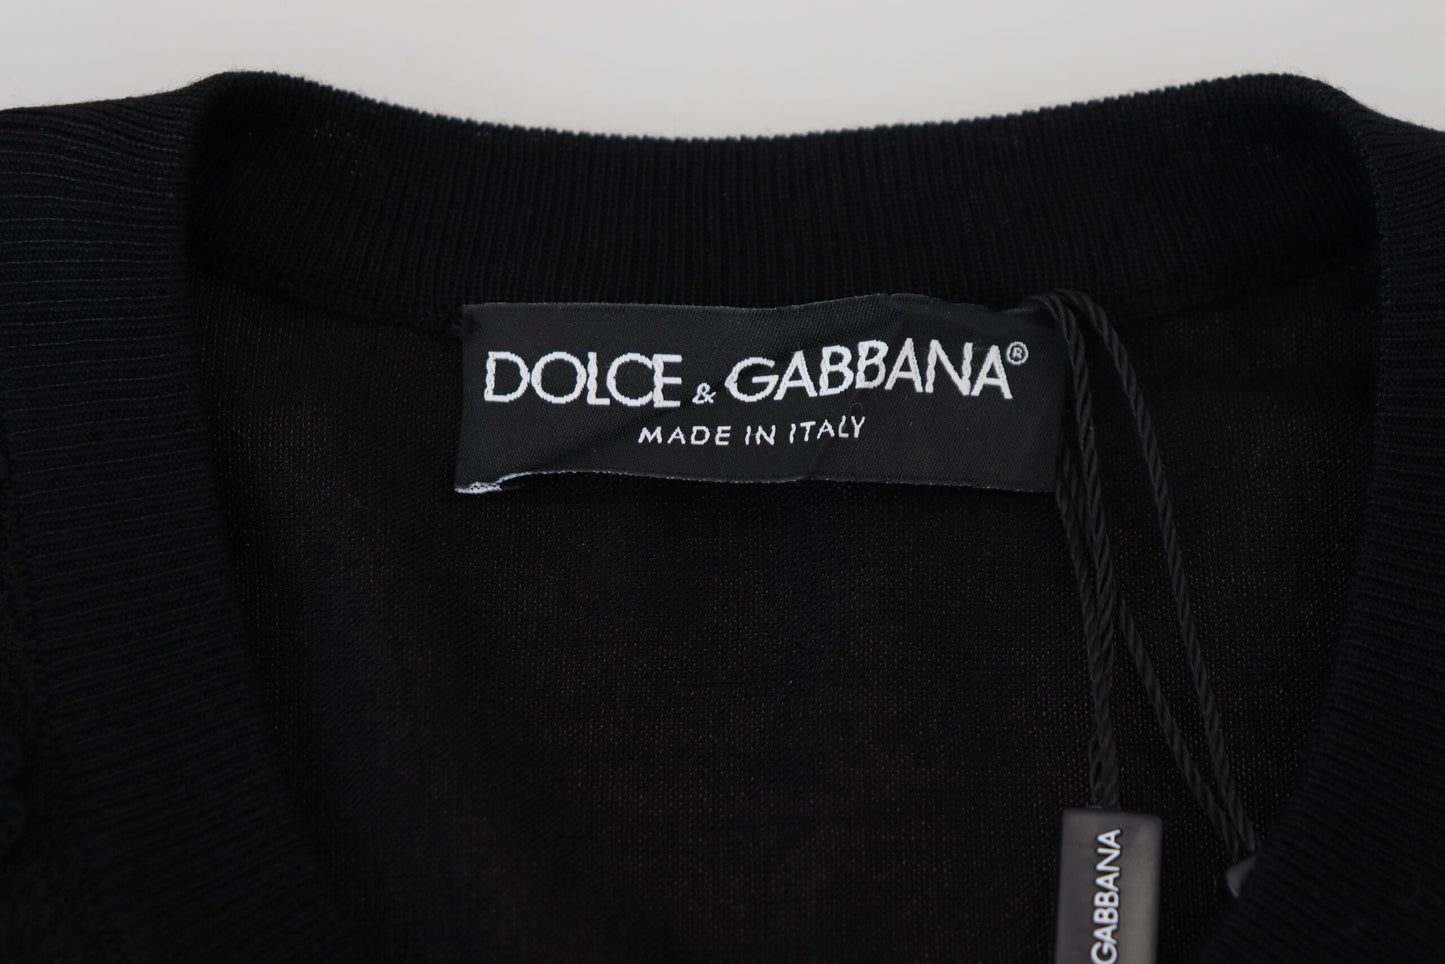 Dolce & Gabbana Elegant Black Floral Lace Cardigan Sweater